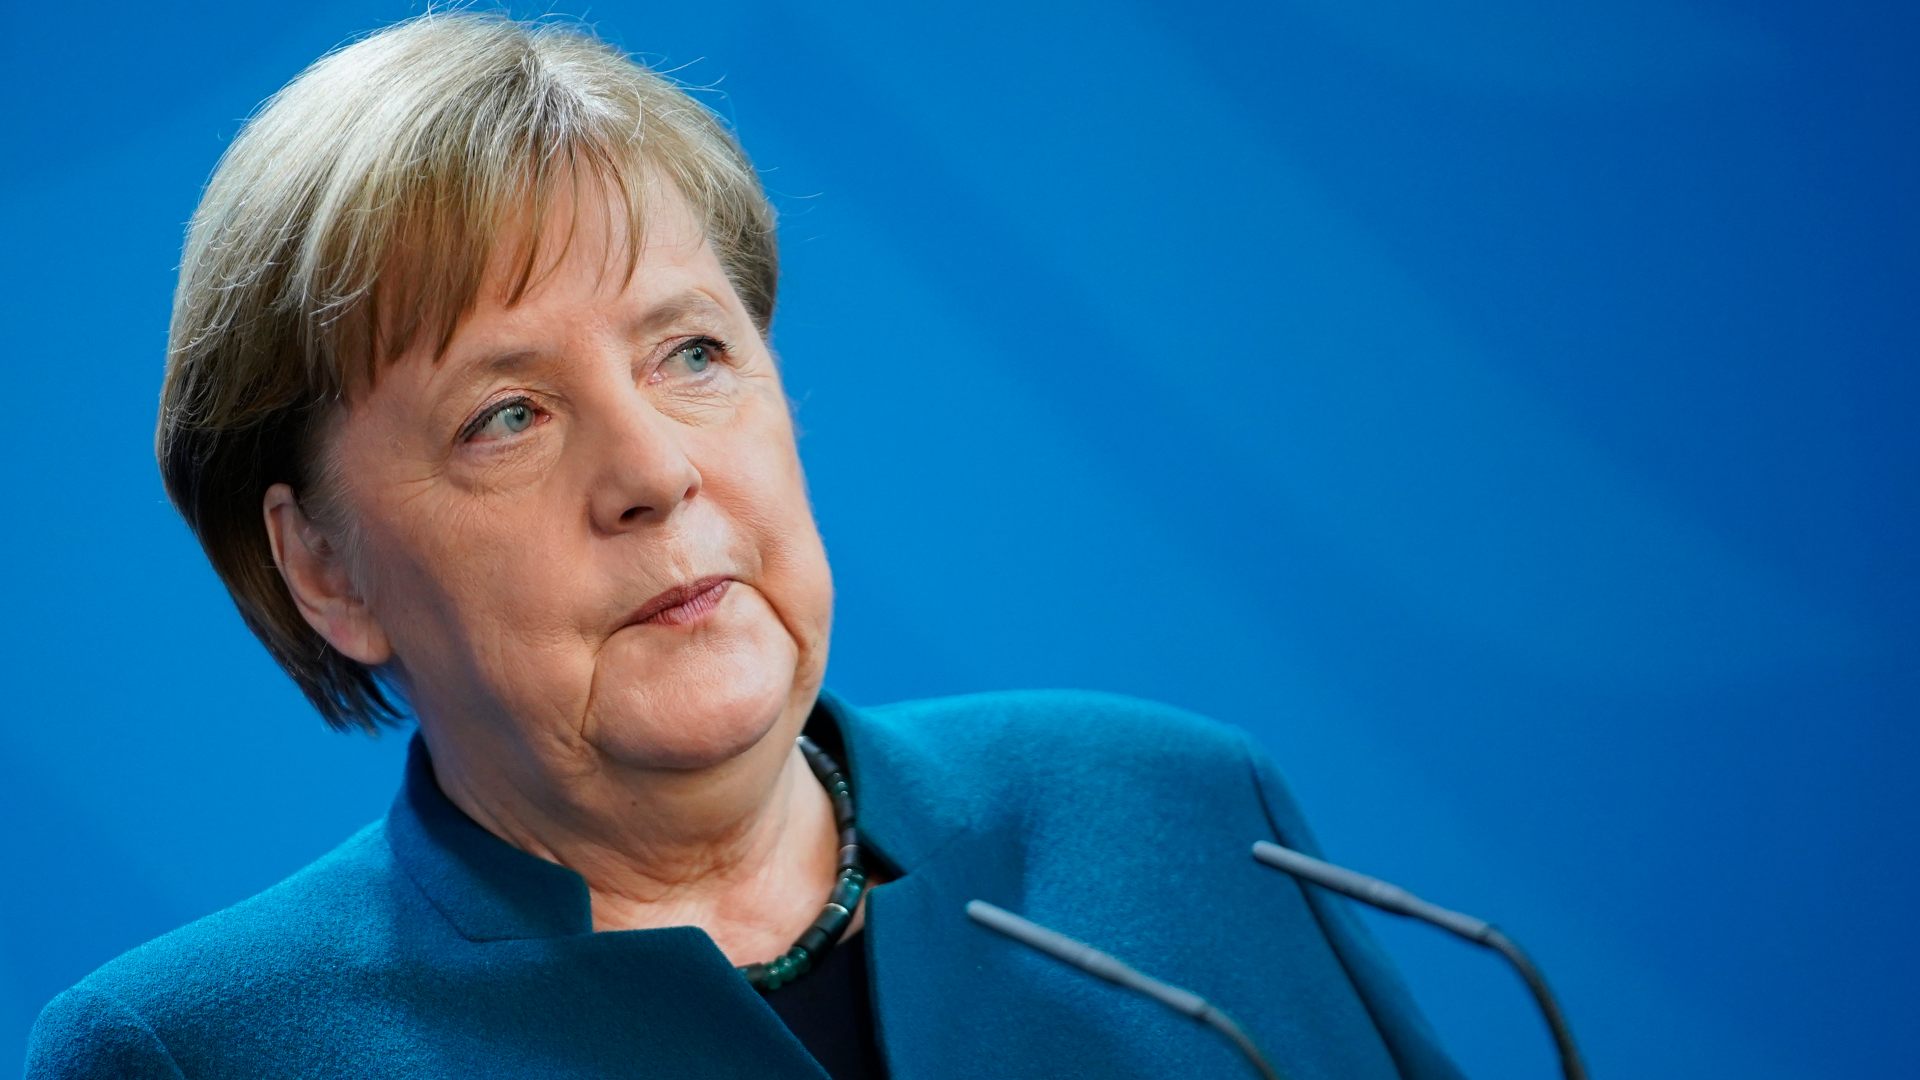 Merkel da negativo en COVID-19 en un primer test